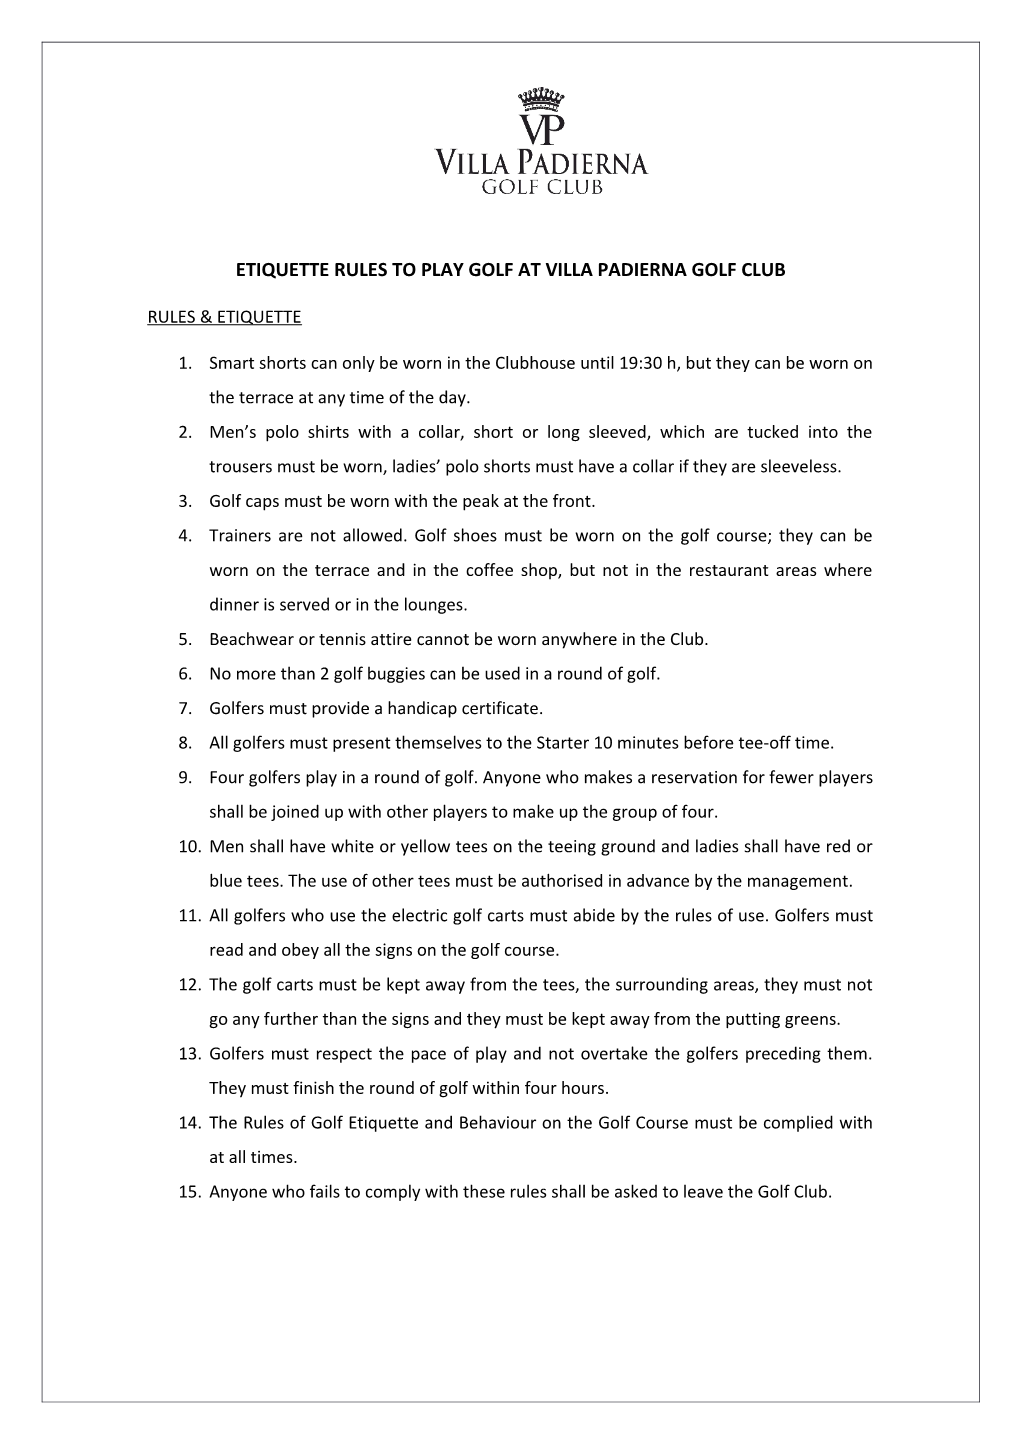 Etiquette Rules to Play Golf at Villa Padierna Golf Club